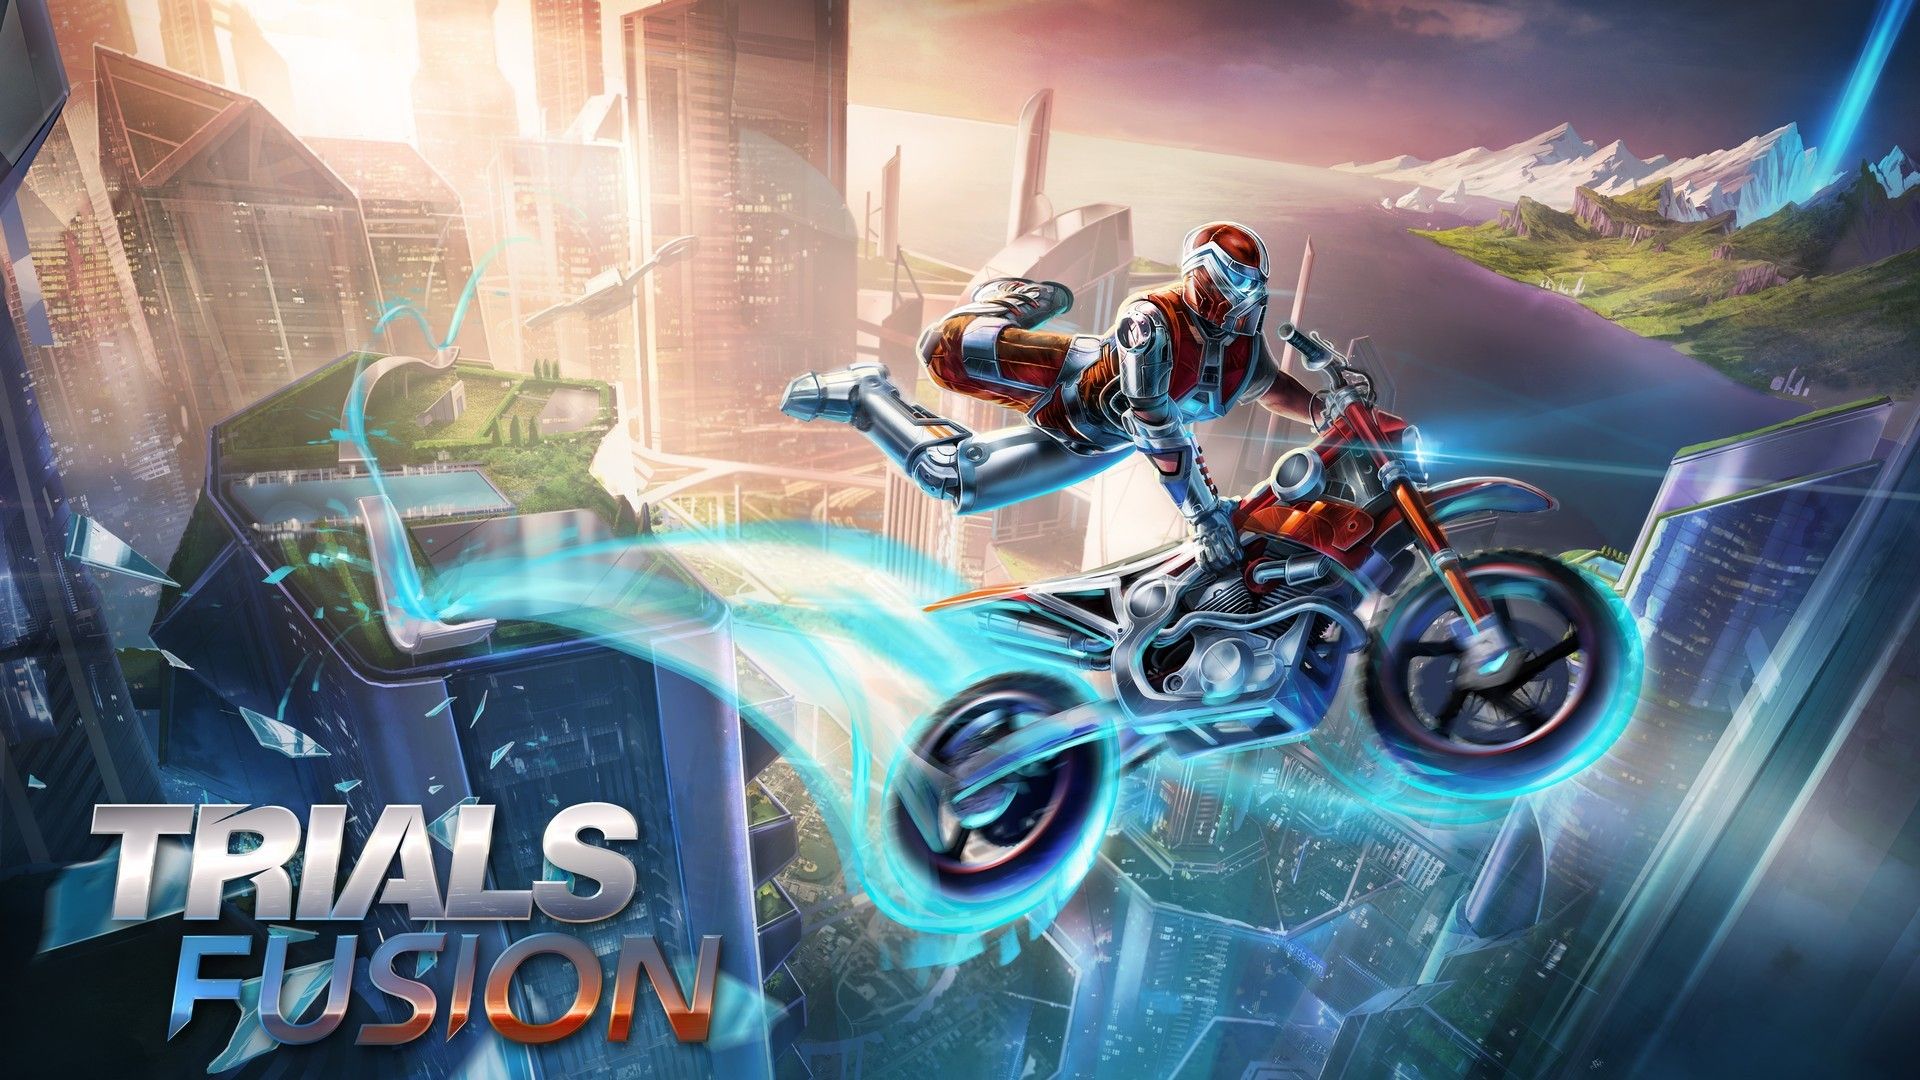 Trials Fusion Video Game HD Wallpaper 54259 1920x1080px